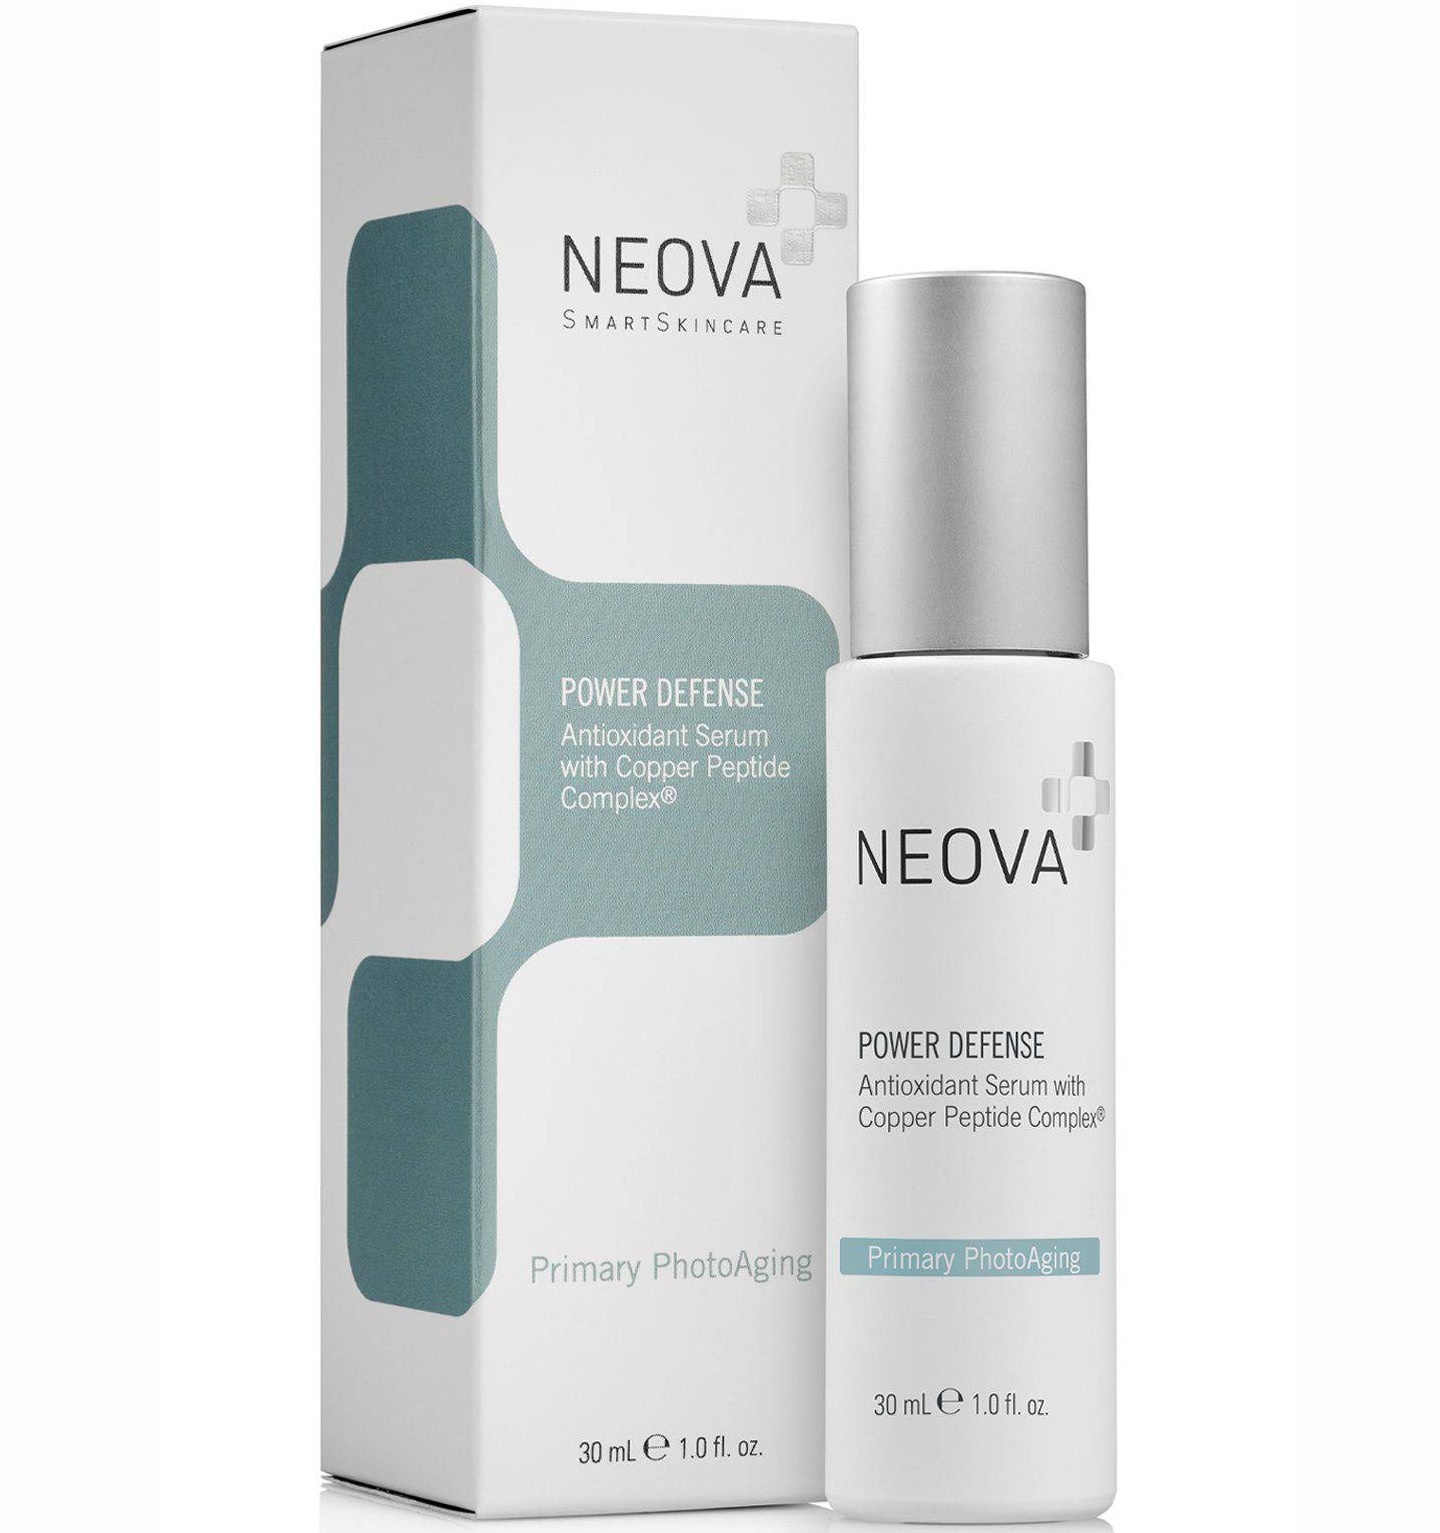 Neova Power Defense Antioxidant Serum With Copper Peptide Complex®